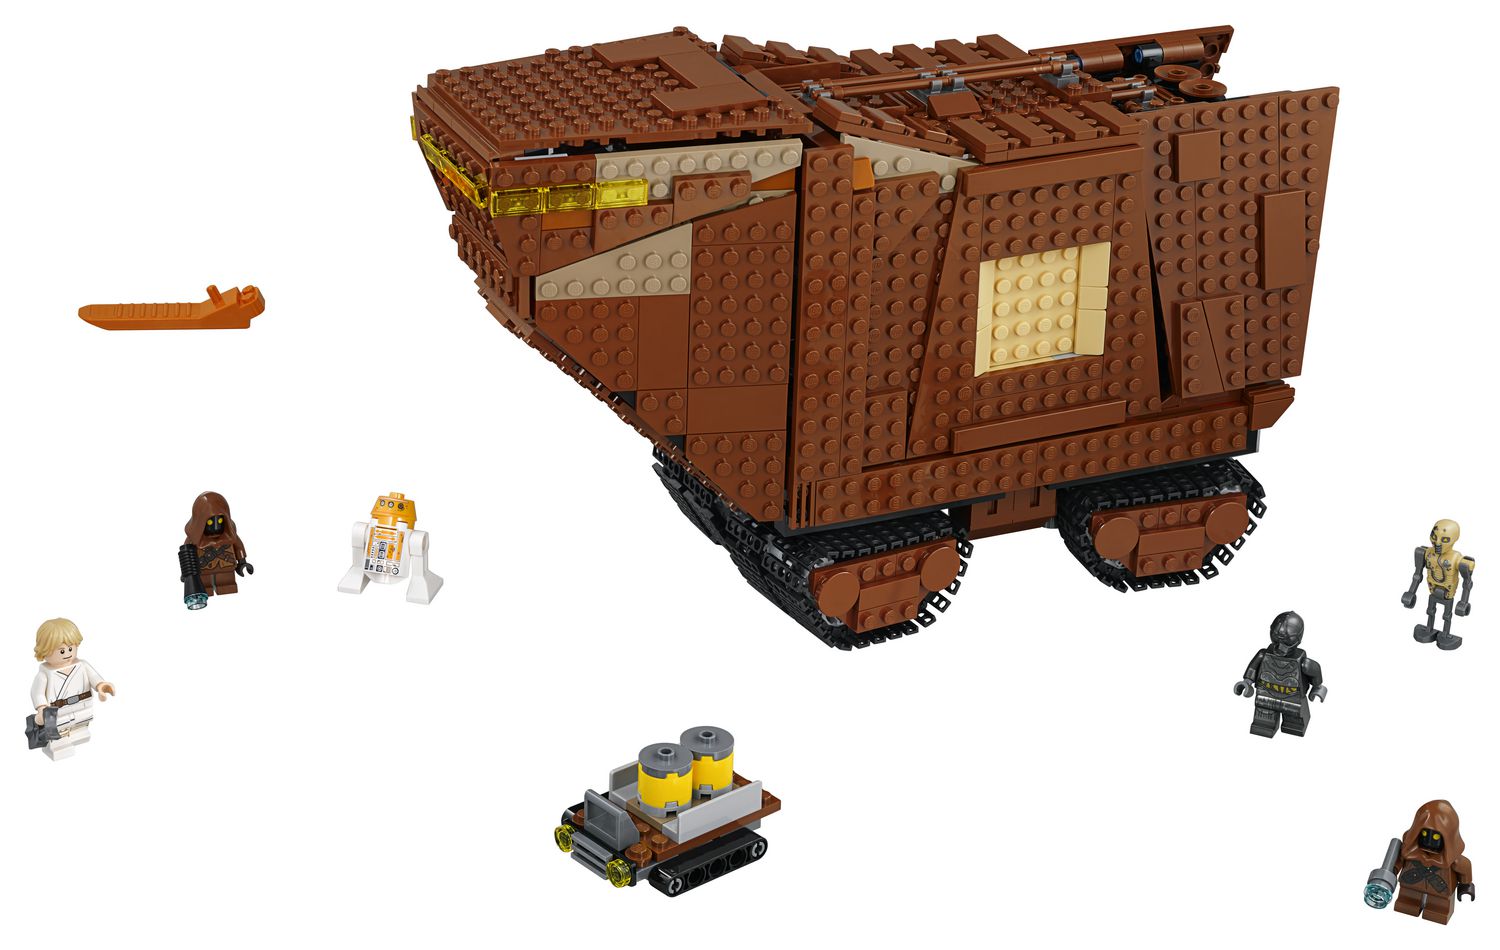 LEGO Star Wars: A New Hope Sandcrawler 75220 Toy Building Kit